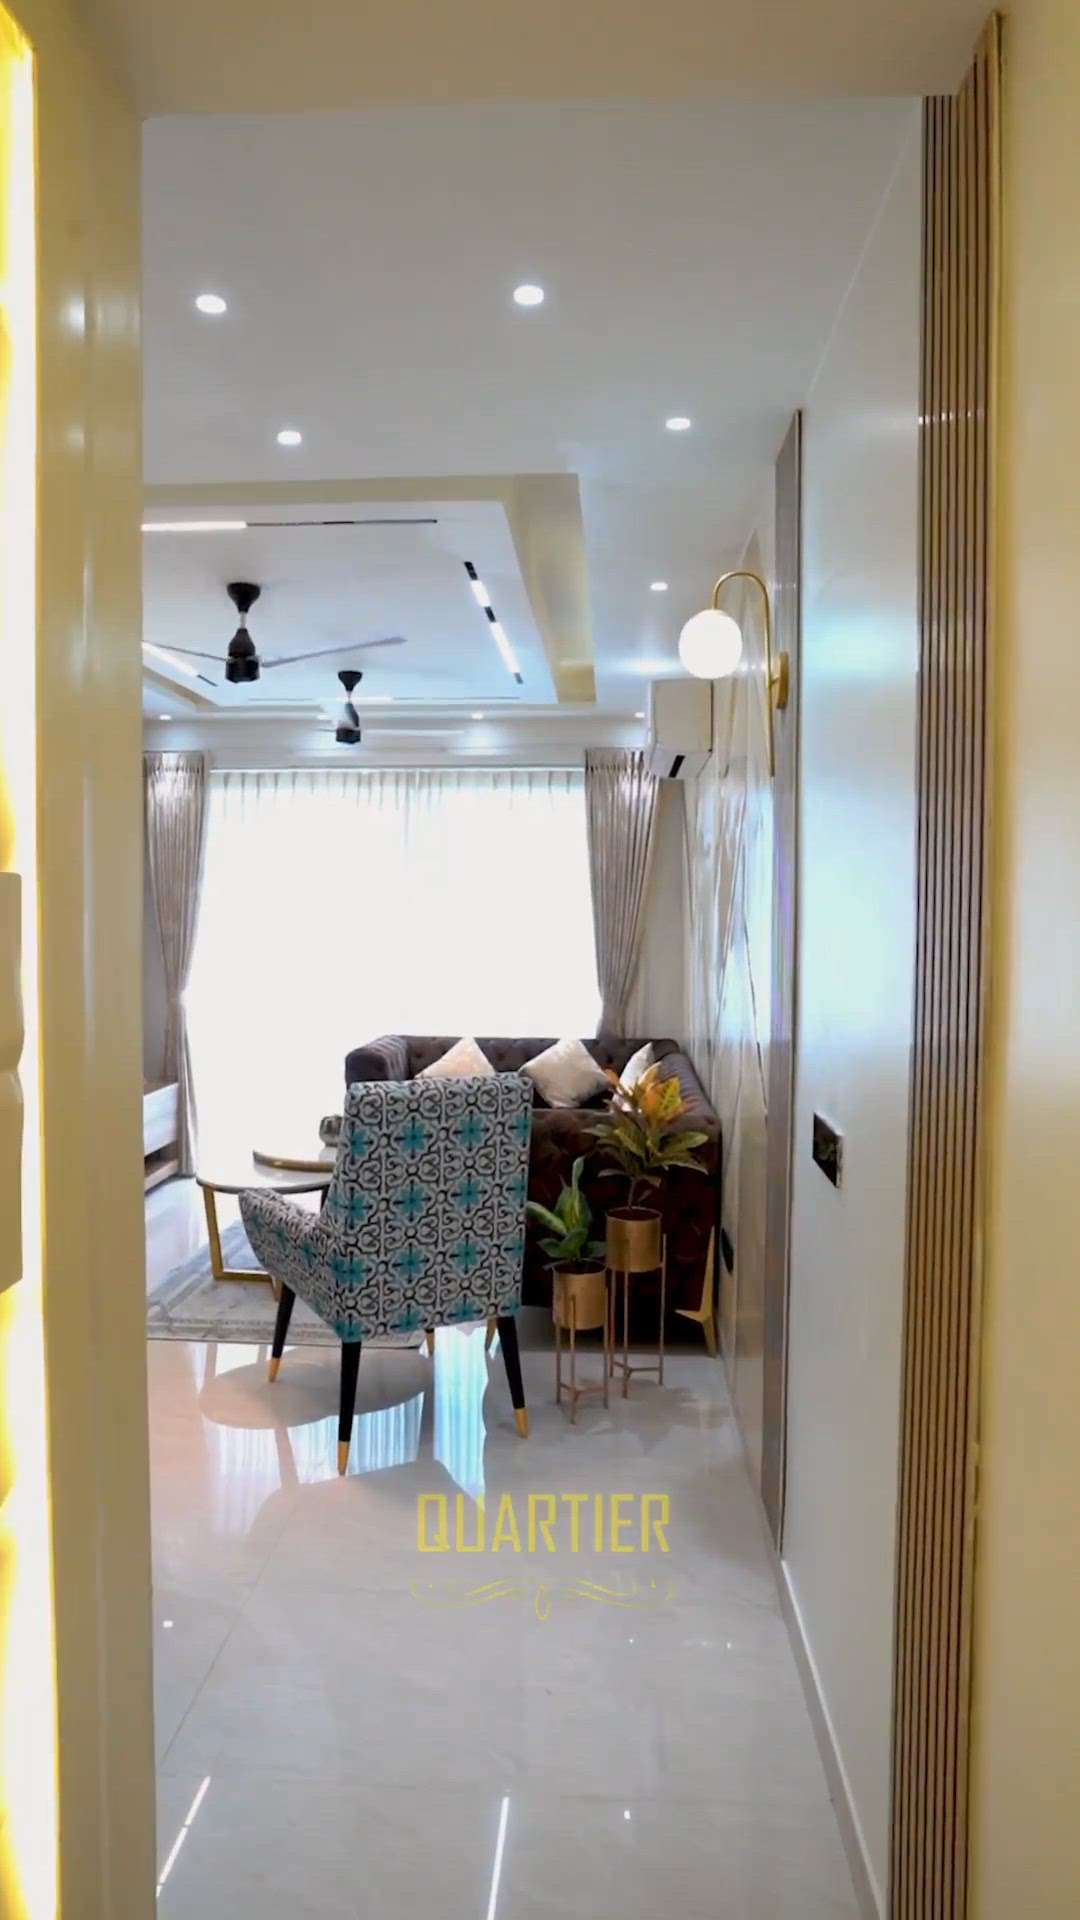 renovation work at indrapuram ghaziabad
contact us 8851667883 
 #InteriorDesigner #LivingroomDesigns #HouseDesigns #KitchenInterior #MasterBedroom #BedroomDesigns  #foyerdesign #louverspanel #LivingRoomTVCabinet #KidsRoom